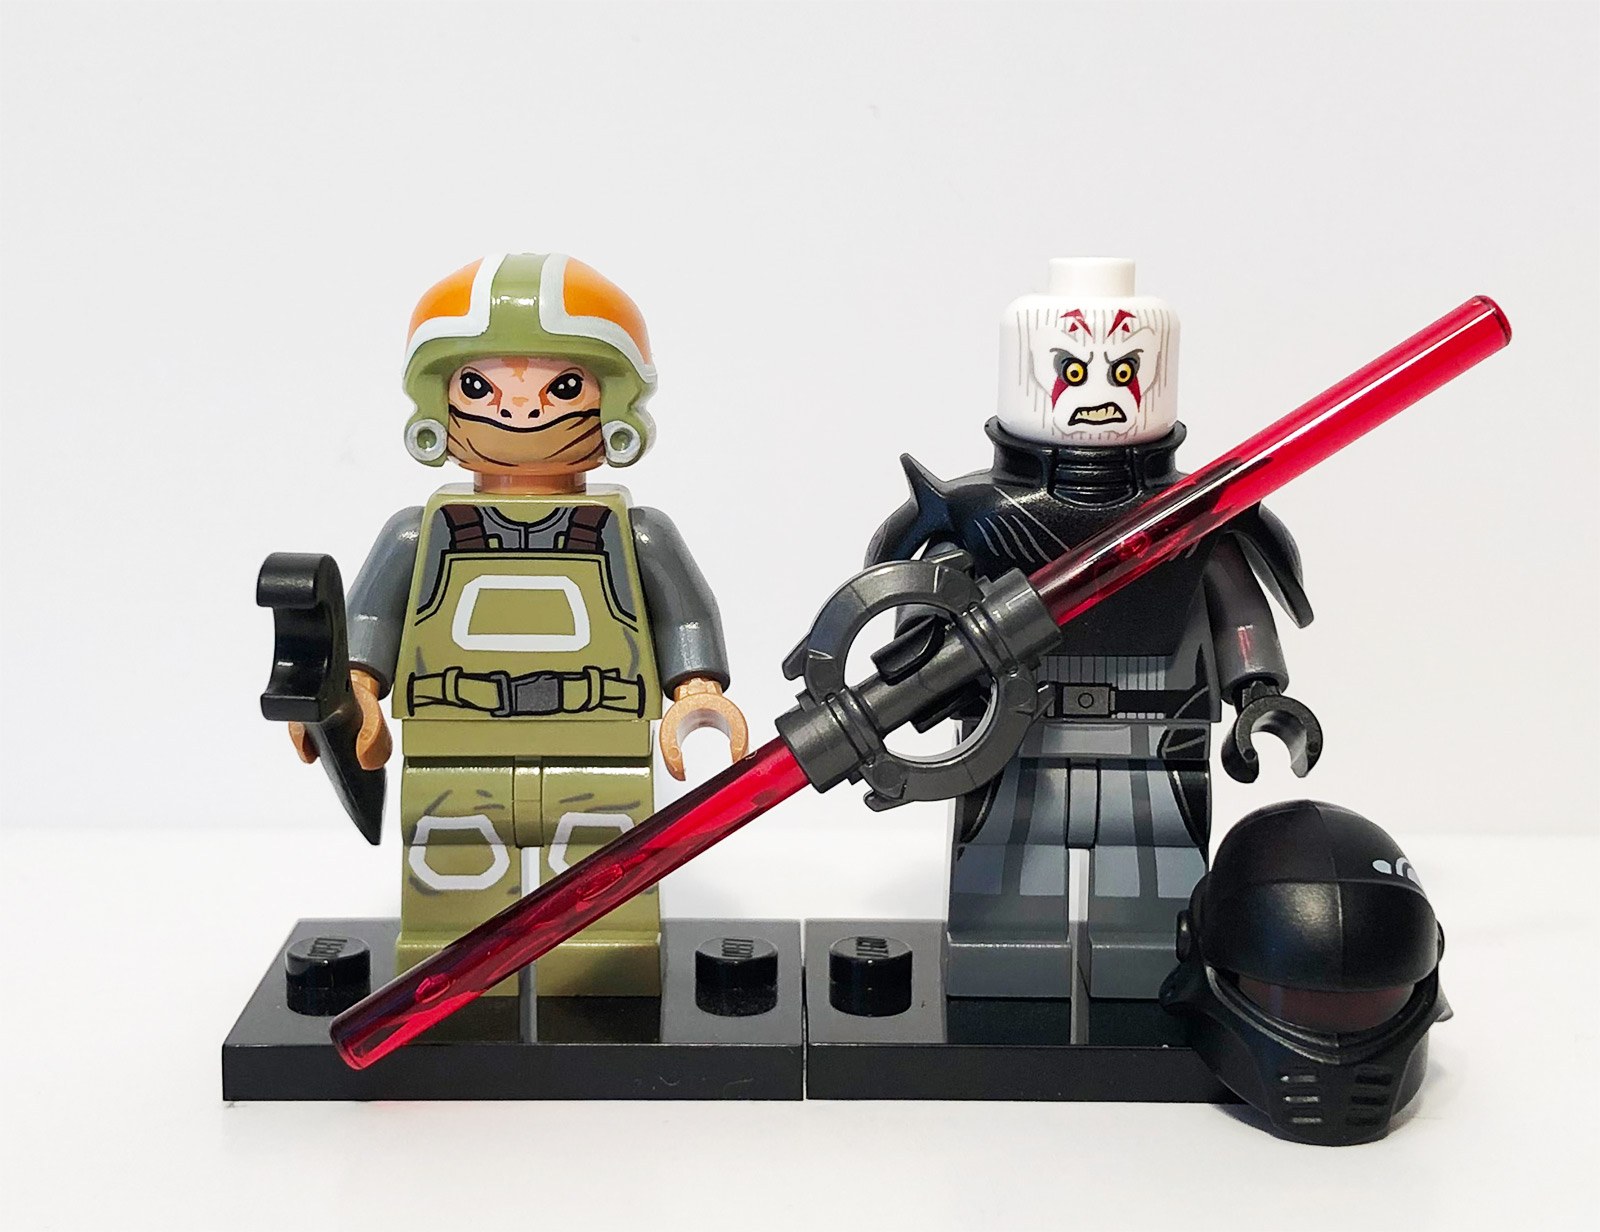 Custom Star Wars Calamari Warrior minifigures on lego bricks